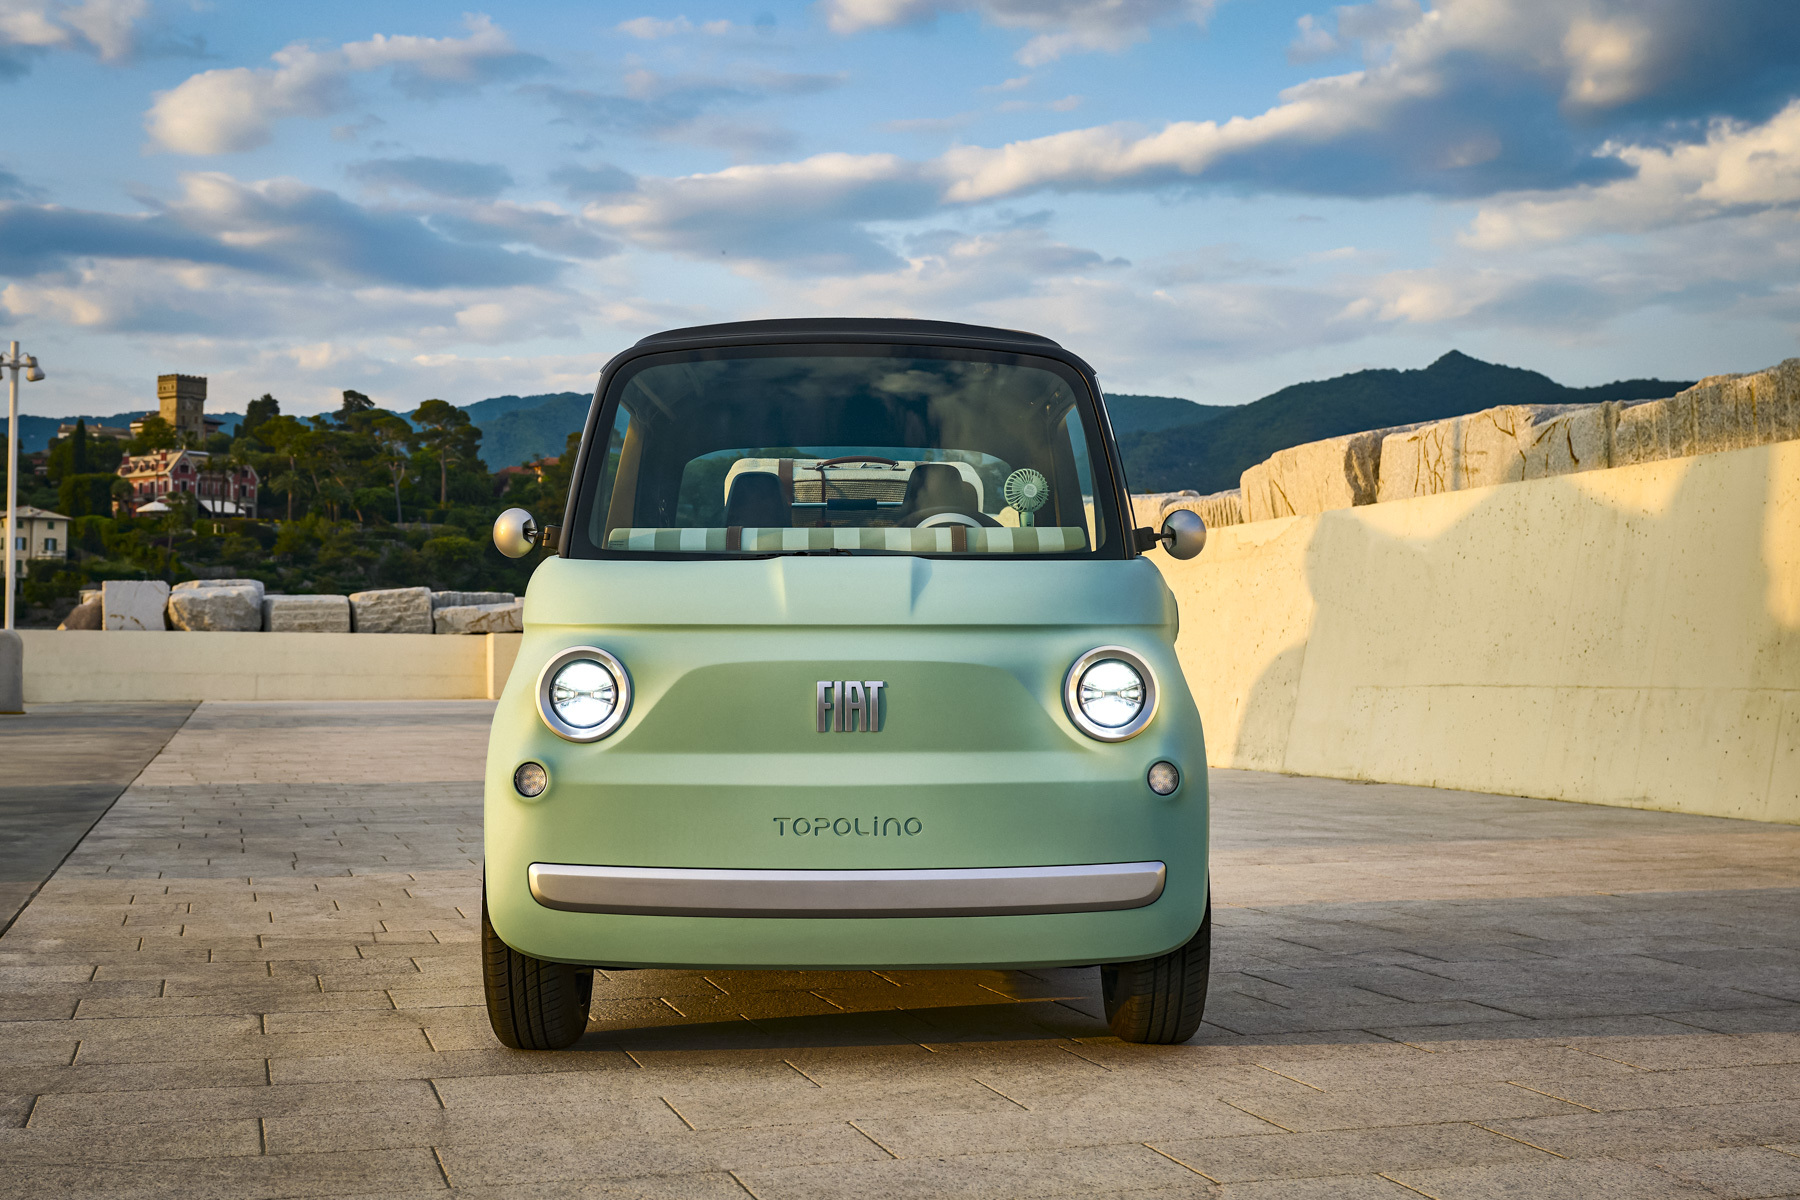 Fiat возродил микроавтомобиль Topolino в виде крошечного электромобиля